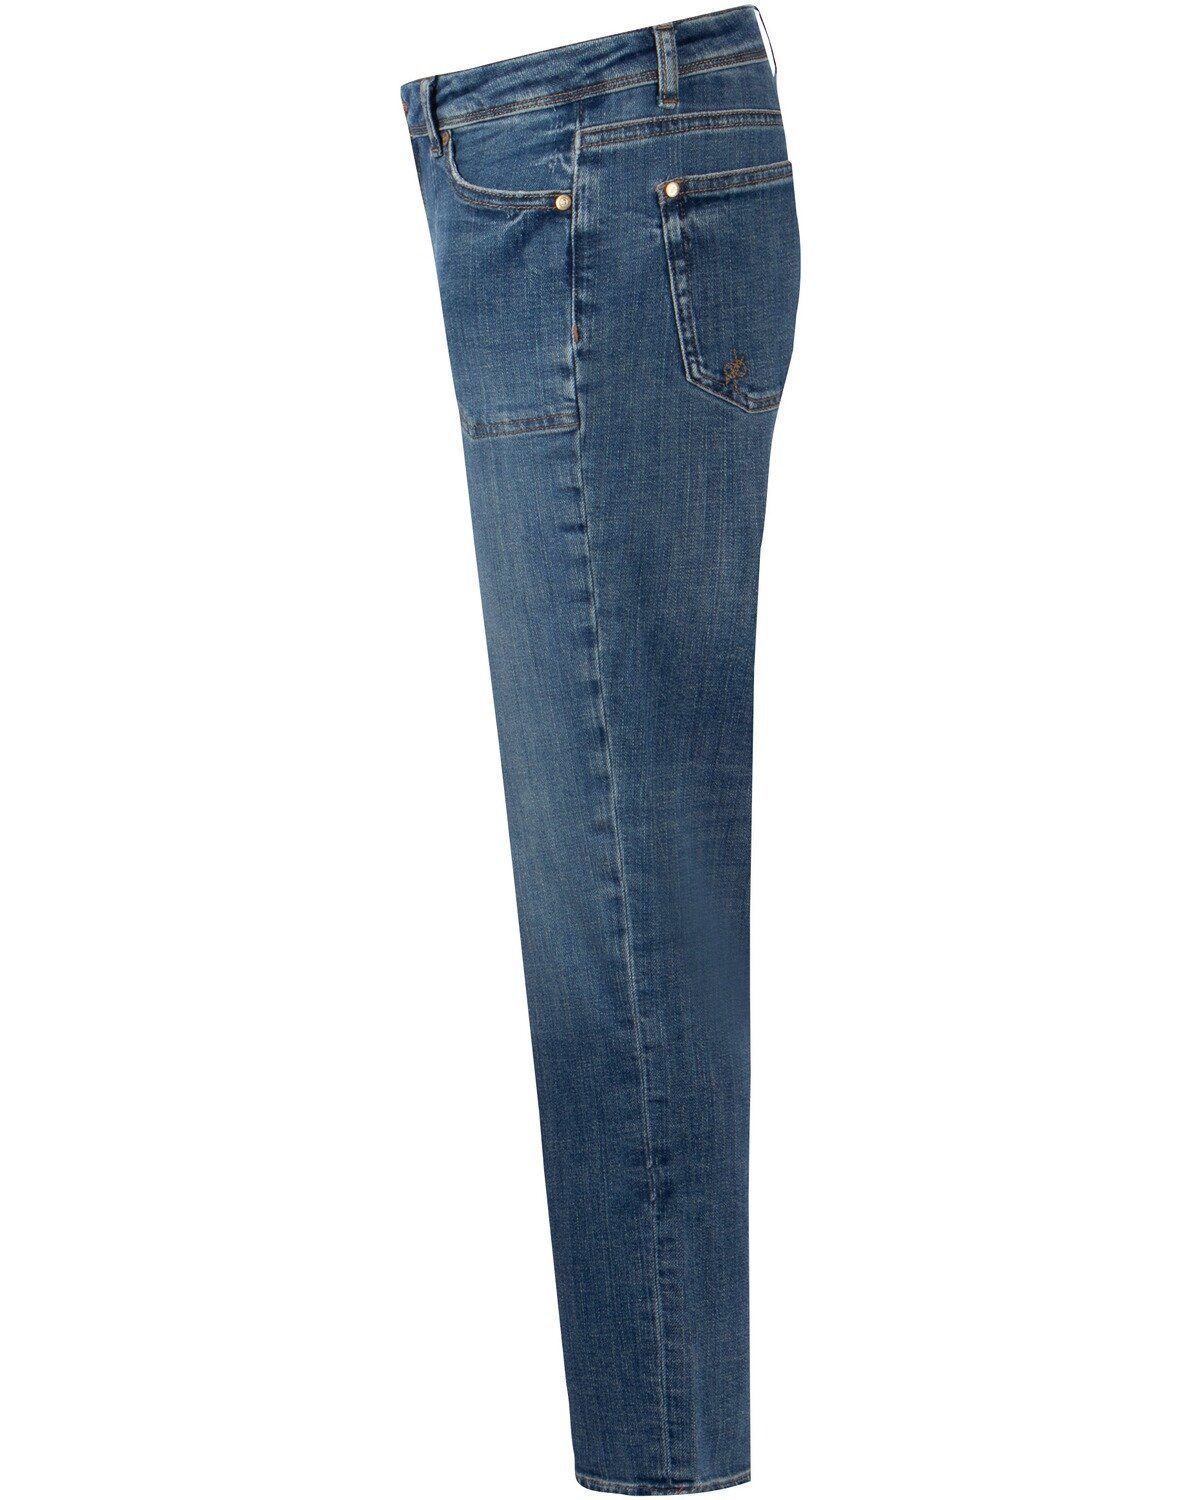 Raffaello Rossi Jeans 5-Pocket-Jeans Leyle